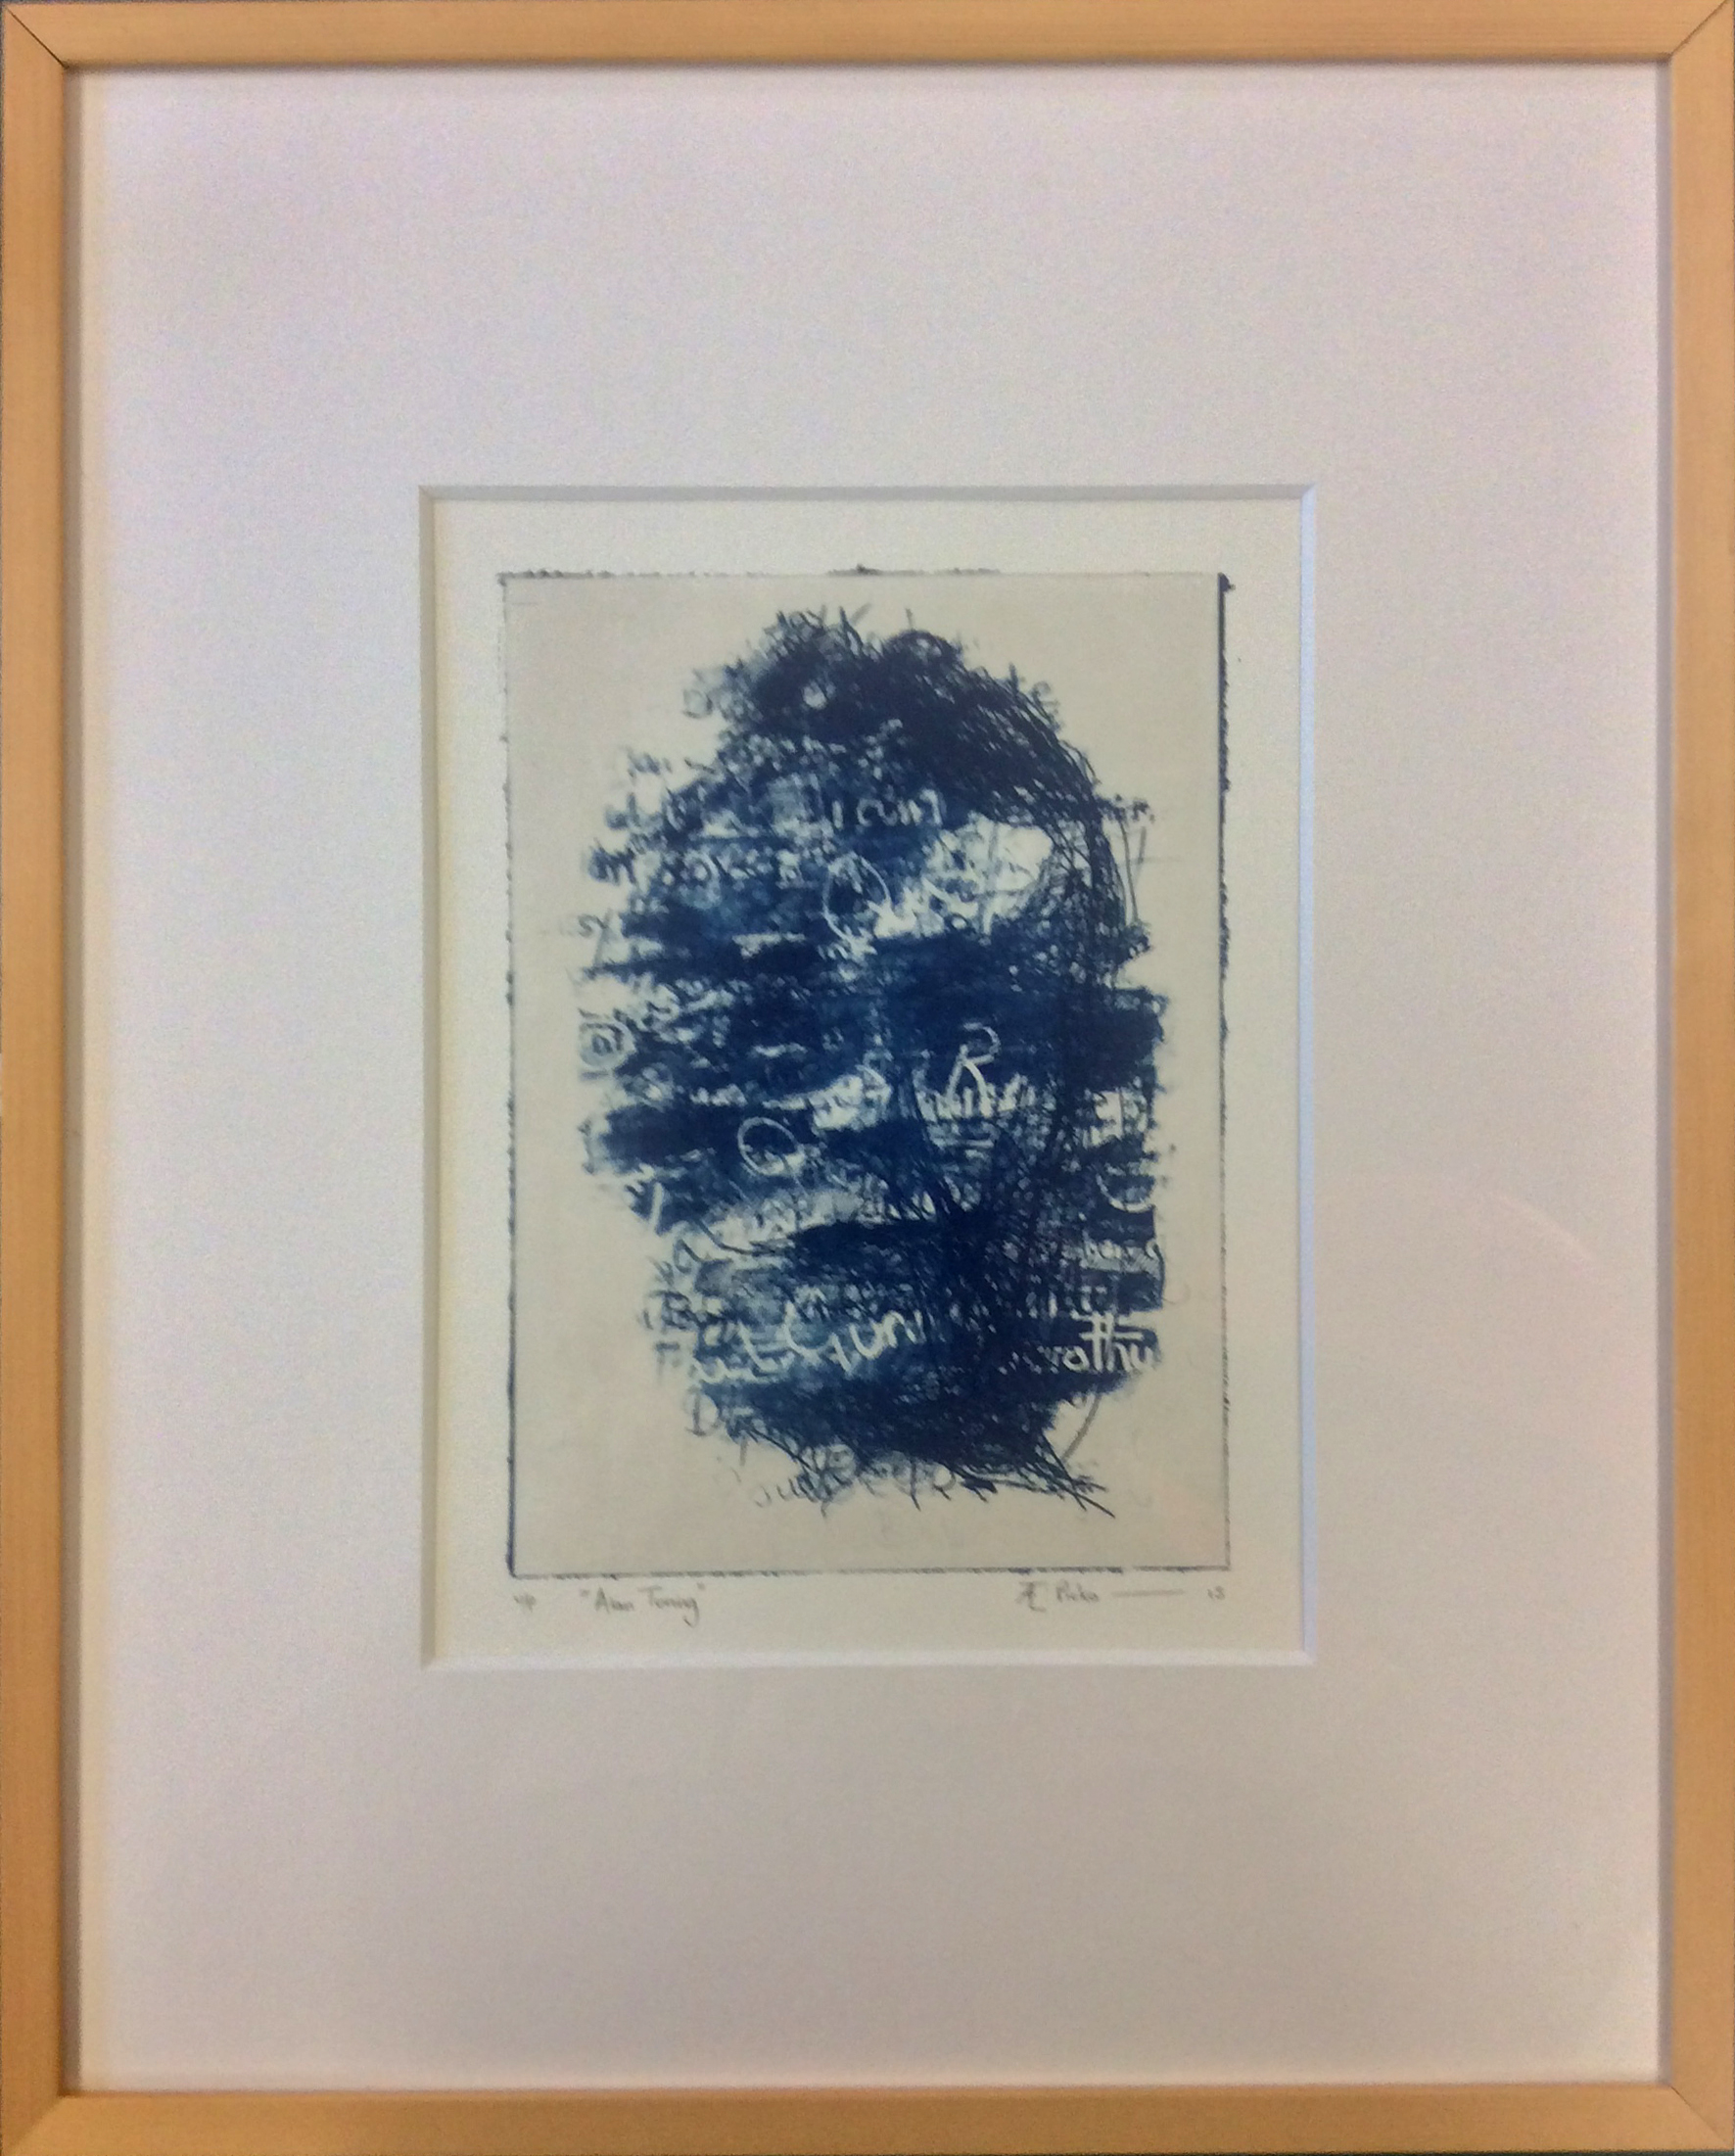 Framed-Alan Turing